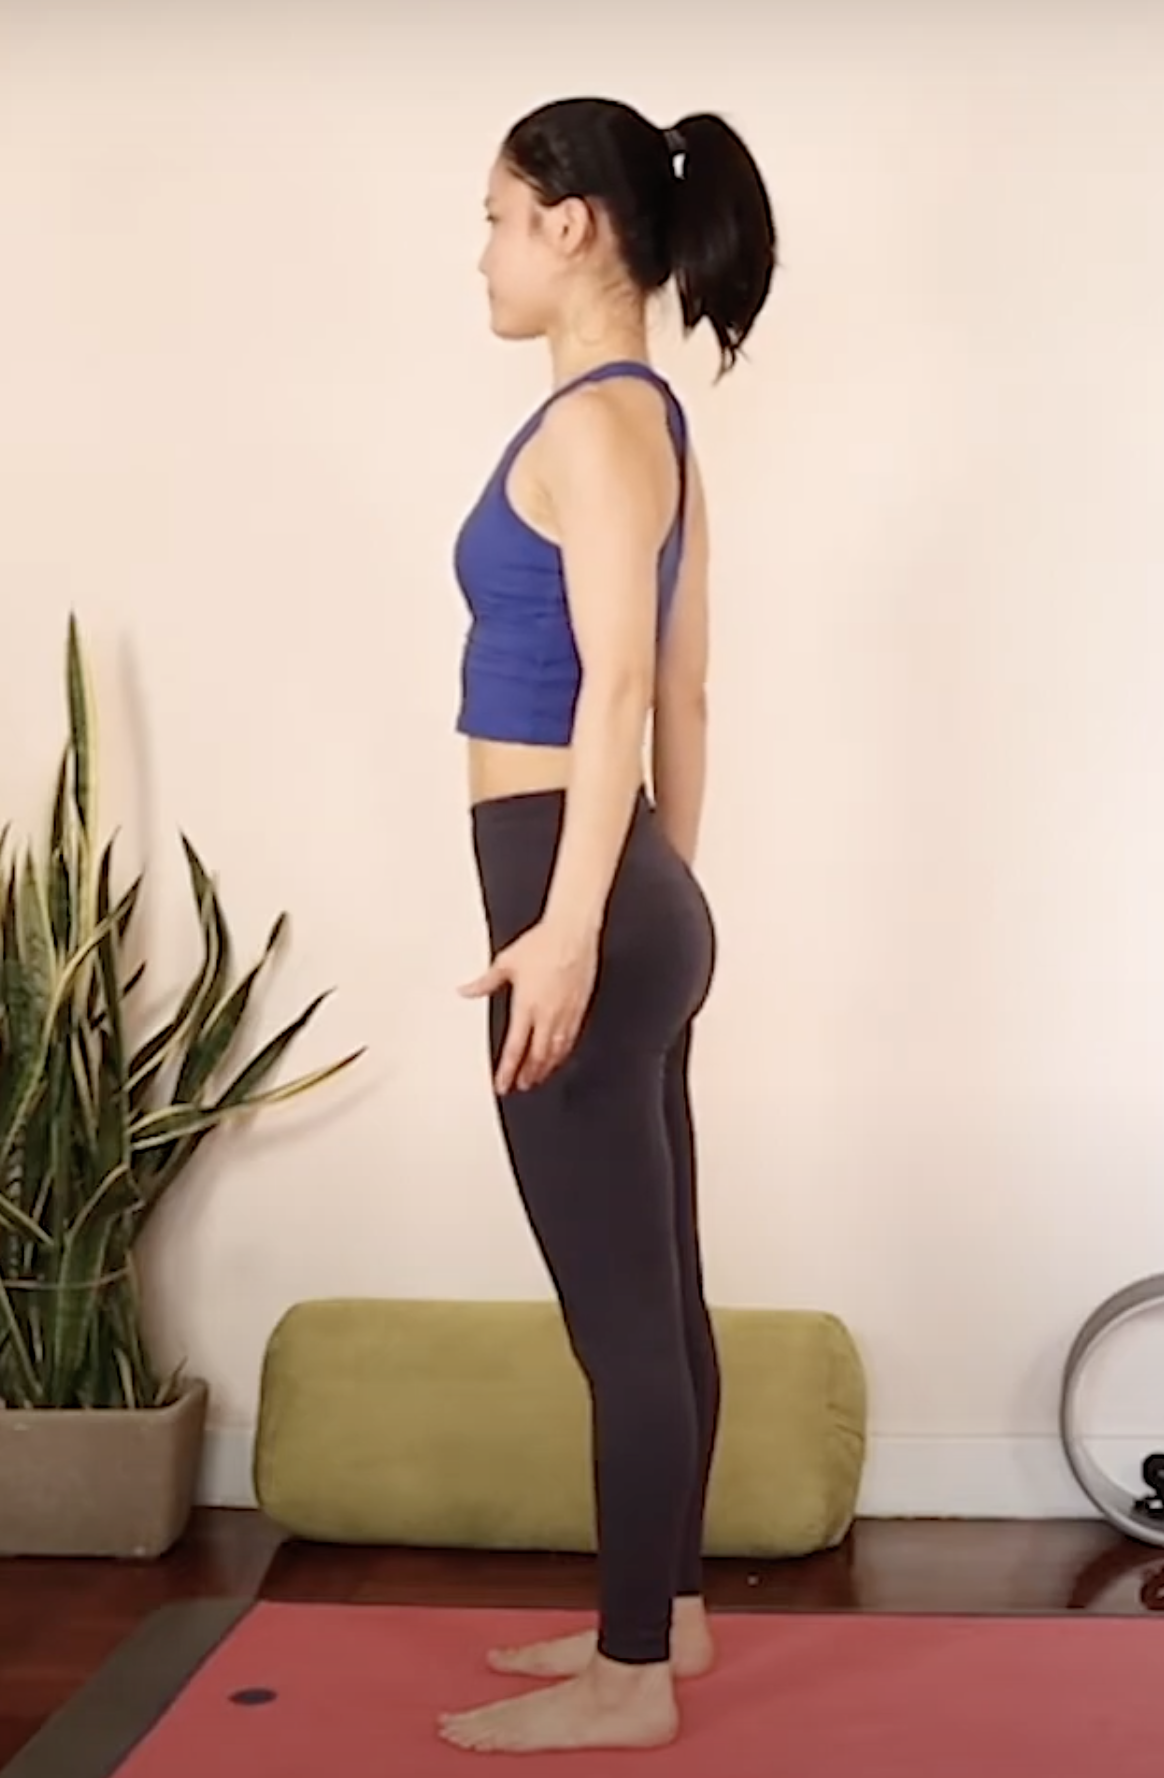 How to do Mountain Pose (Tadasana) in Yoga | Triangle Yoga